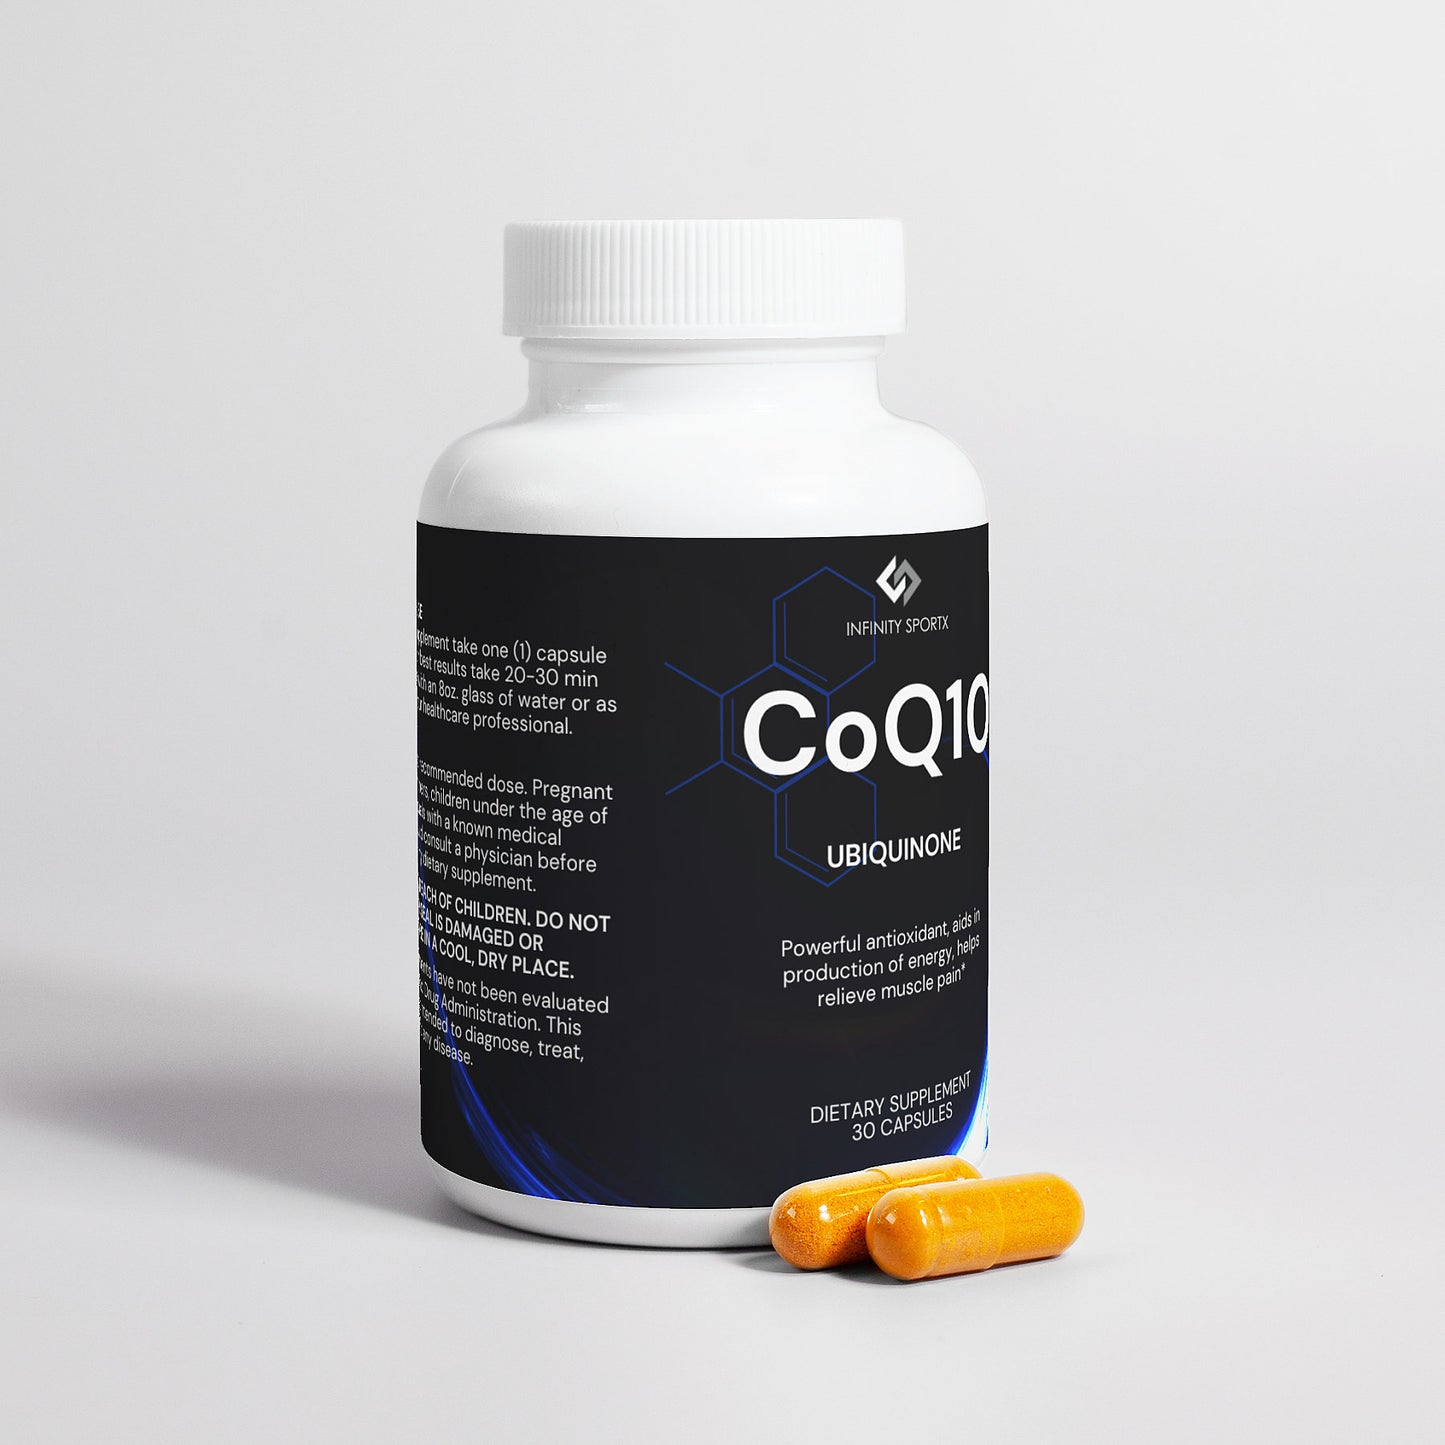 CoQ10 Ubiquinone Supplement: Essential Energy and Antioxidant Support